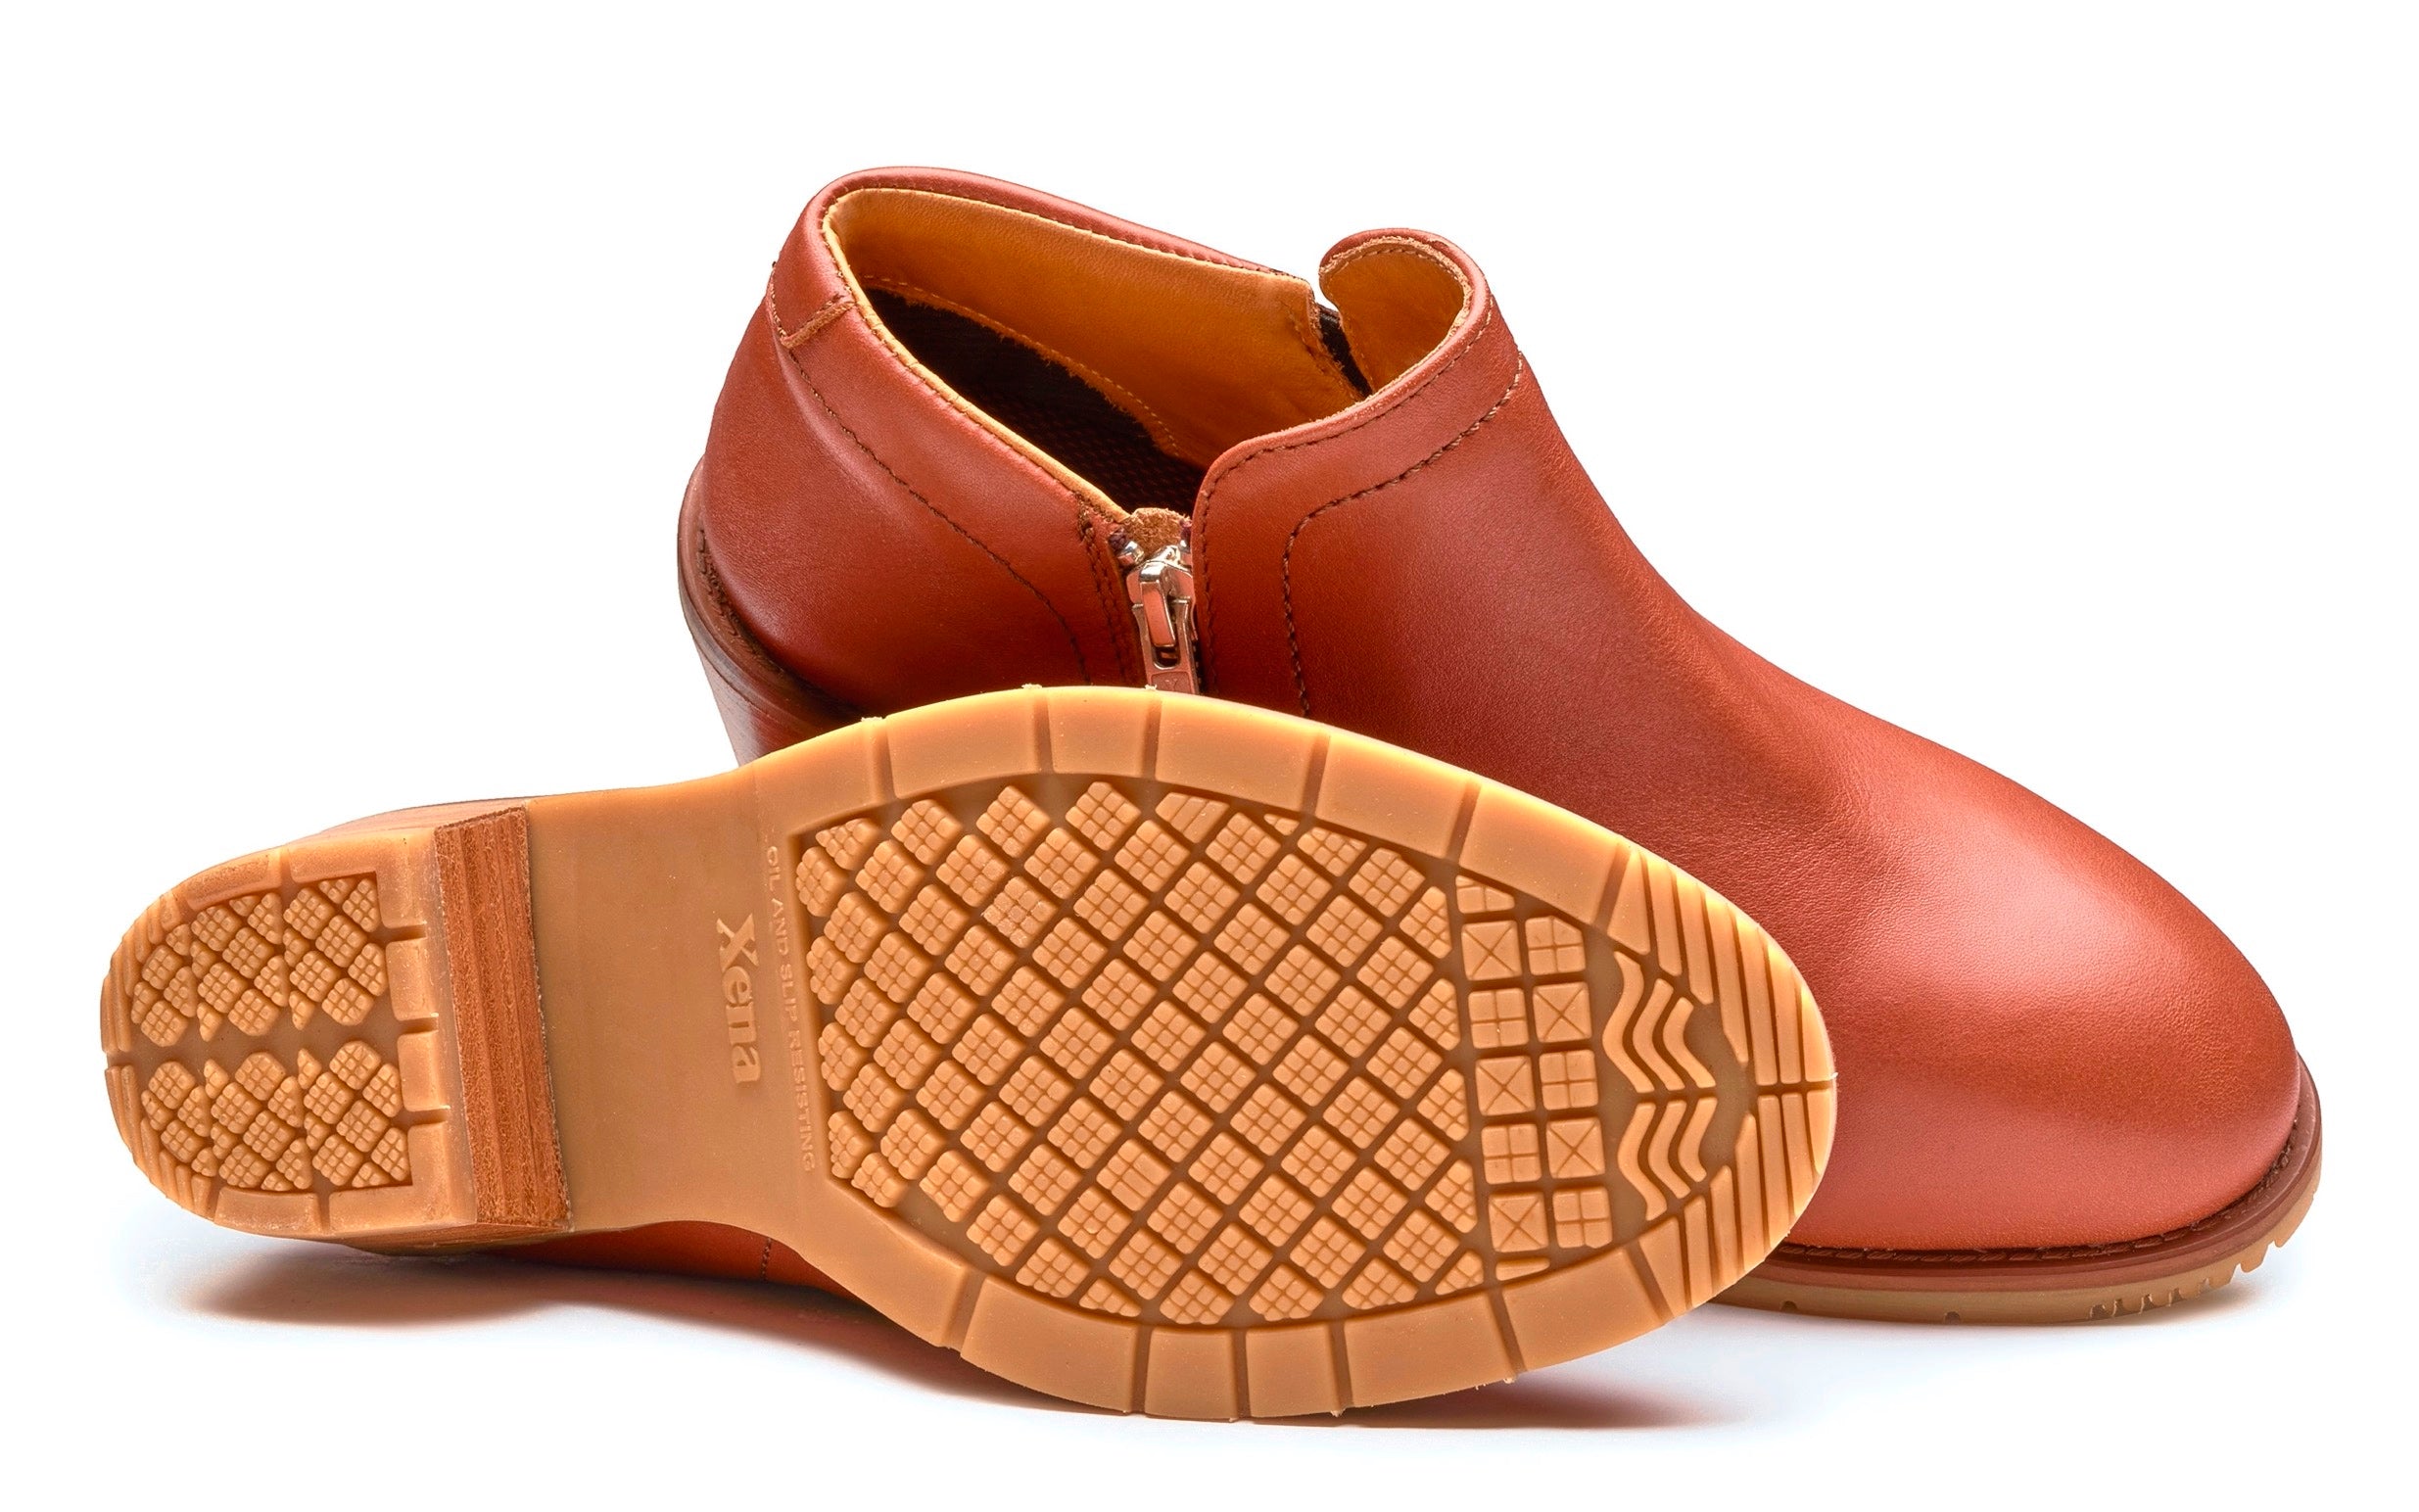 Gravity Steel-Toe Safety Shoe Bootie For Women | Full-Grain Cognac Color | Xena Workwear